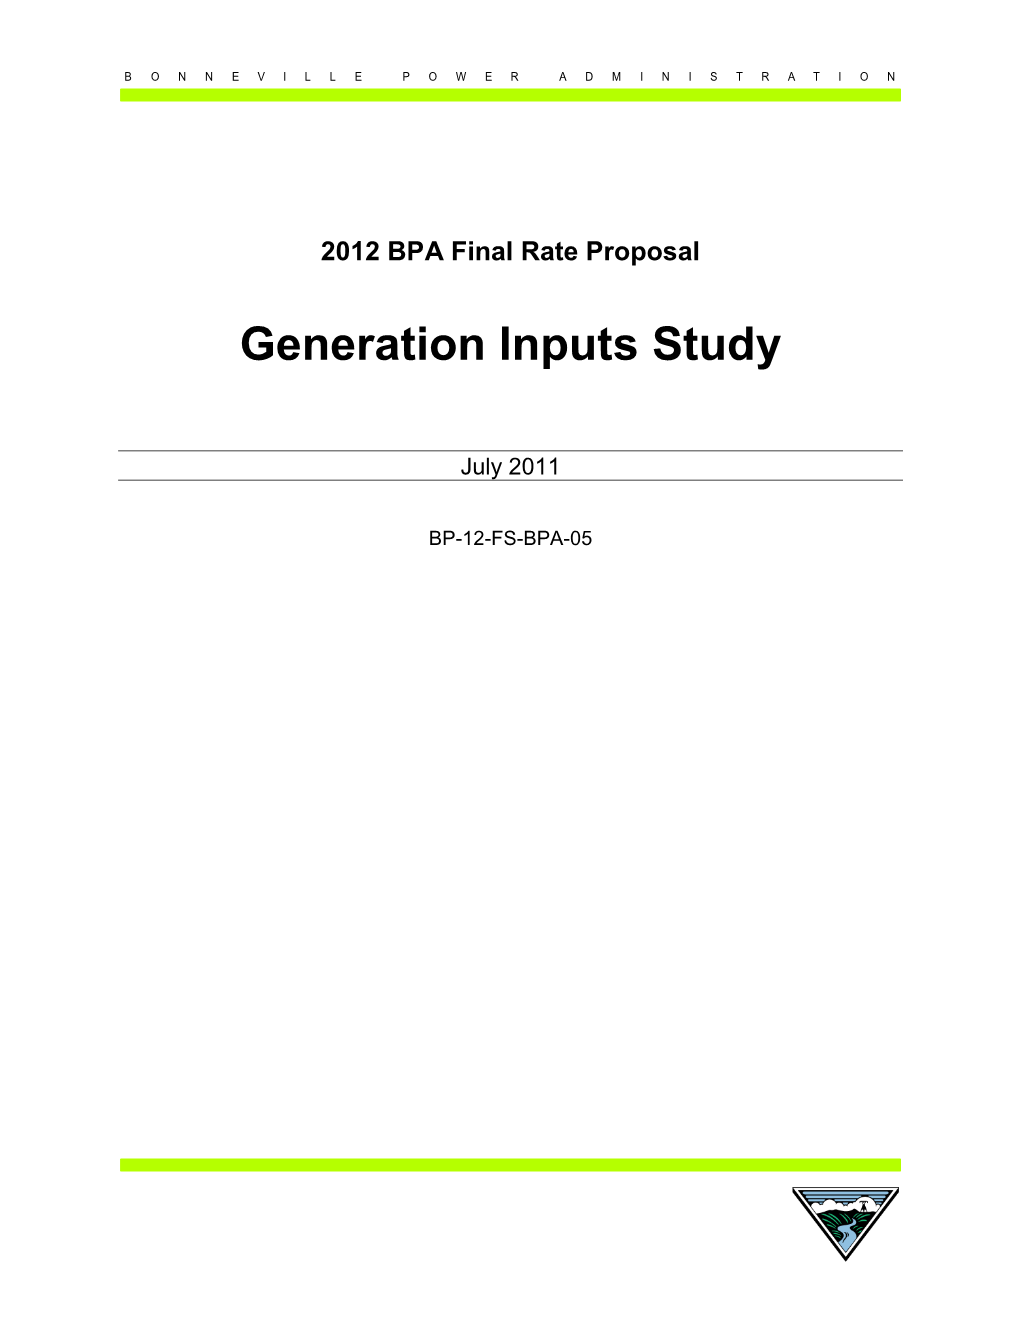 Generation Inputs Study